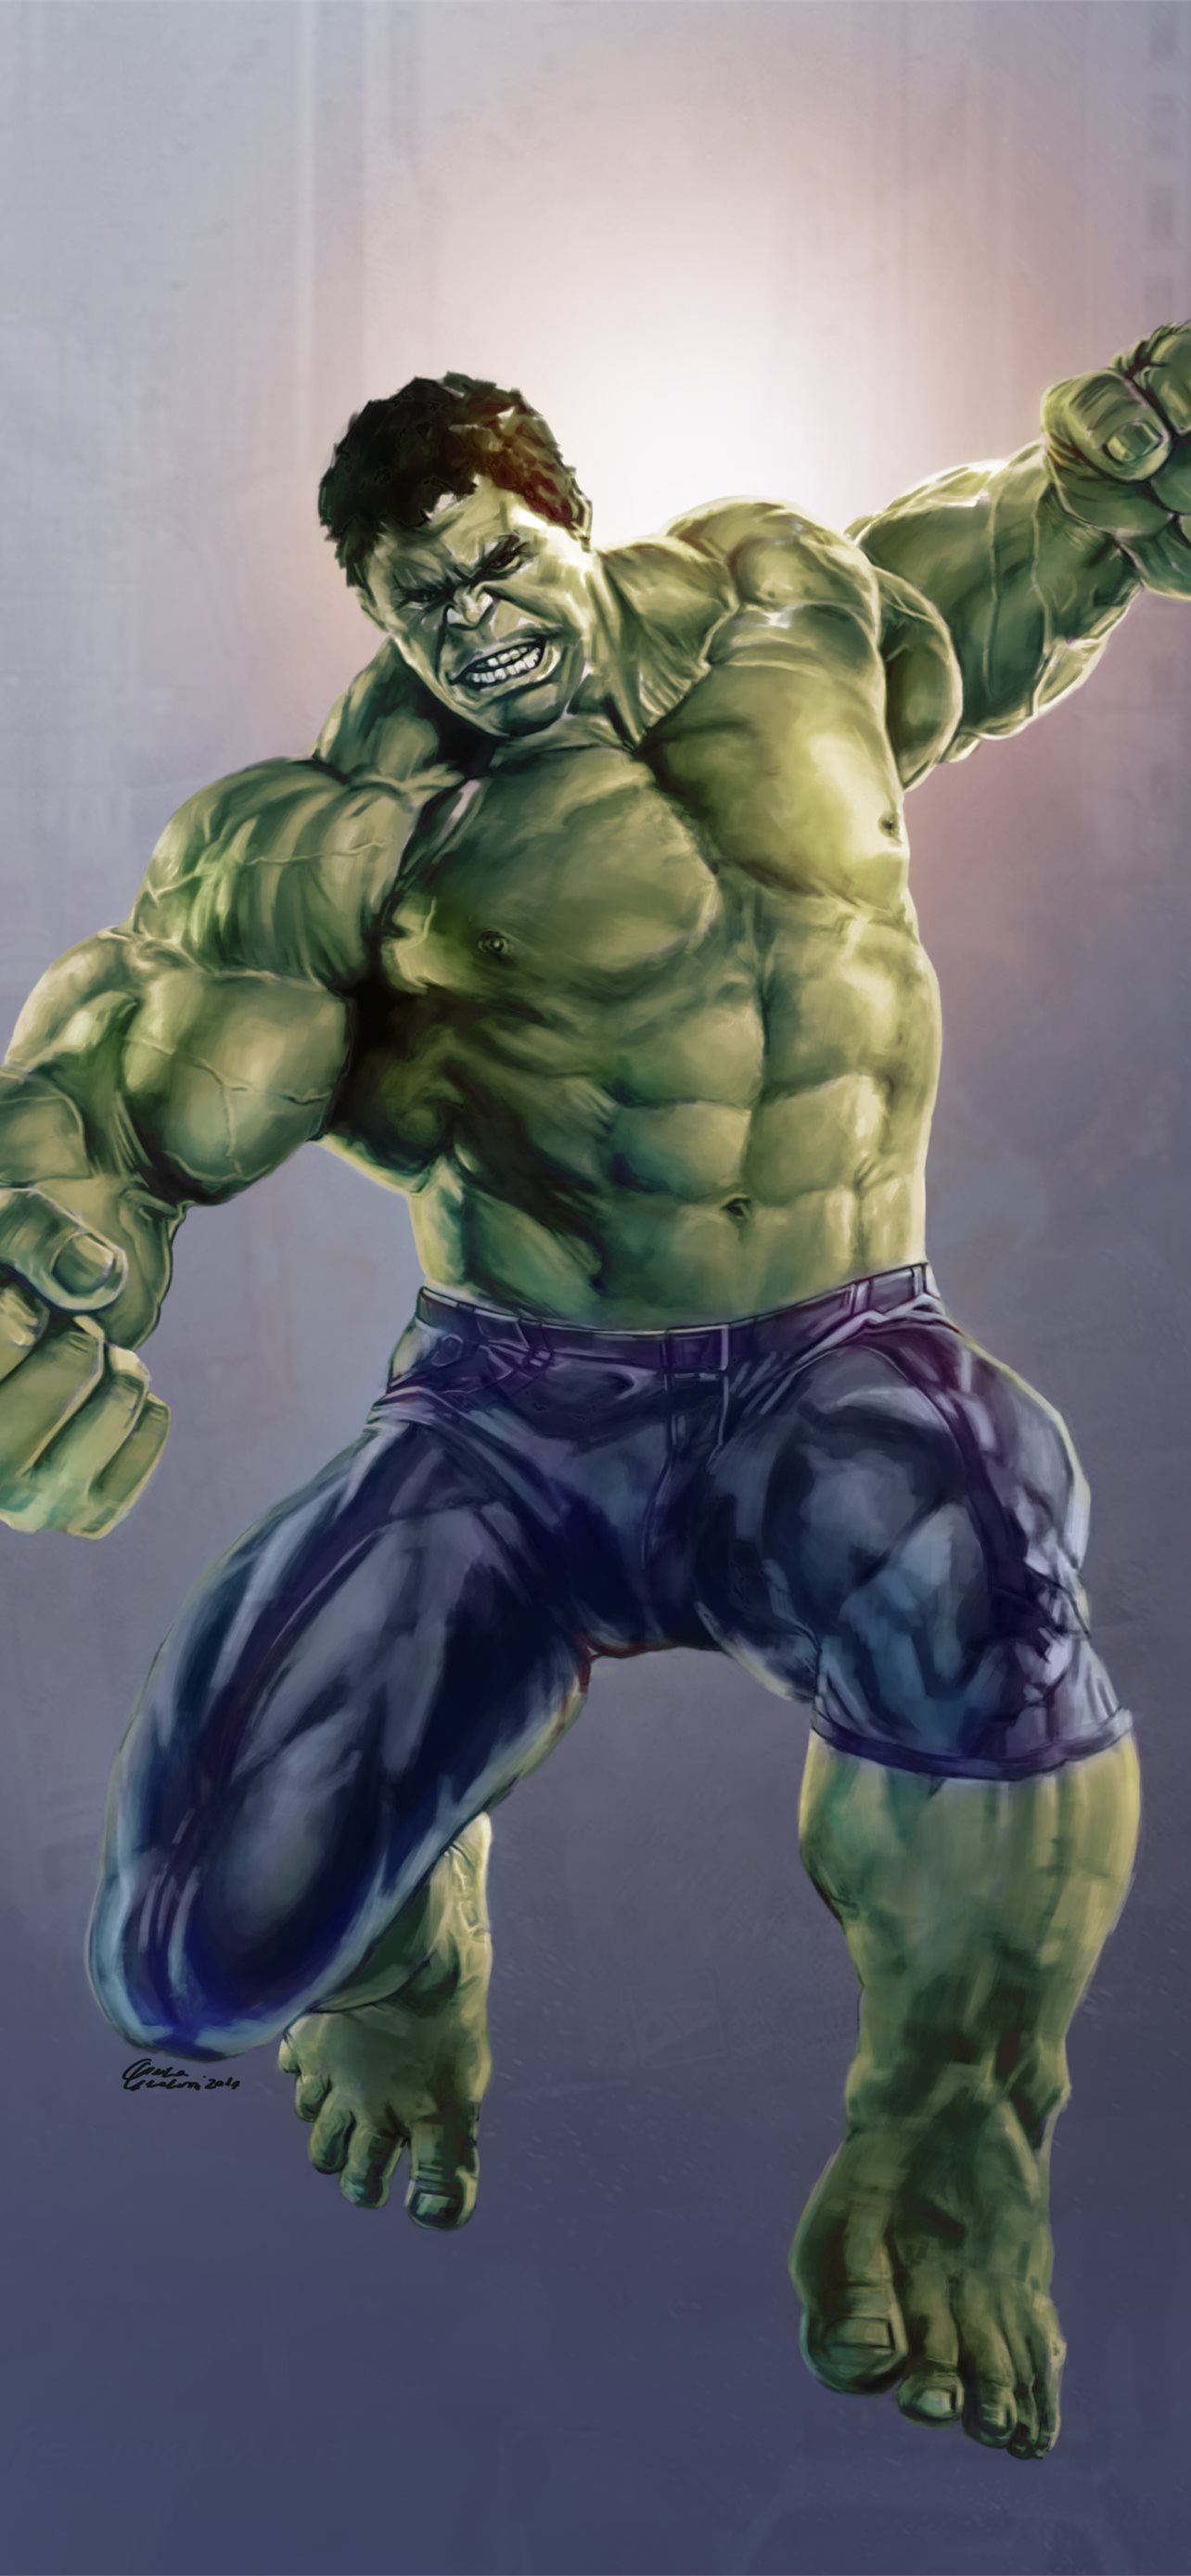 Incredible Hulk teahub io iPhone Wallpapers Free Download